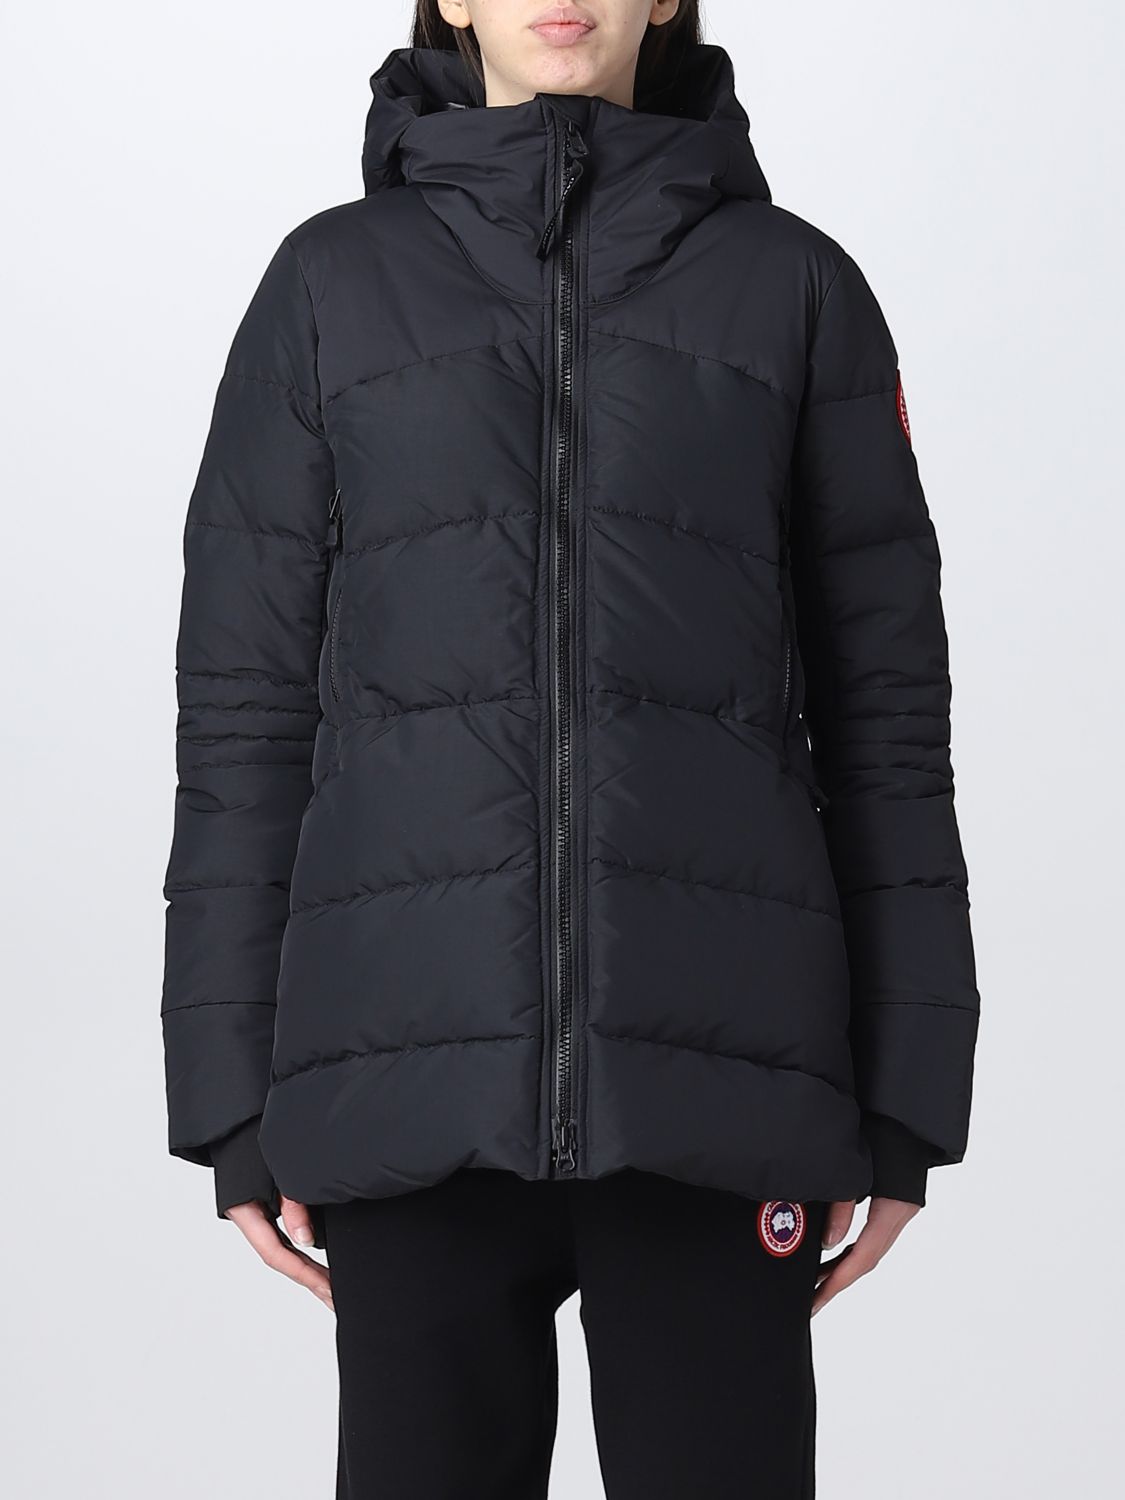 CANADA GOOSE: jacket for woman - Black | Canada Goose jacket 2742L43 ...